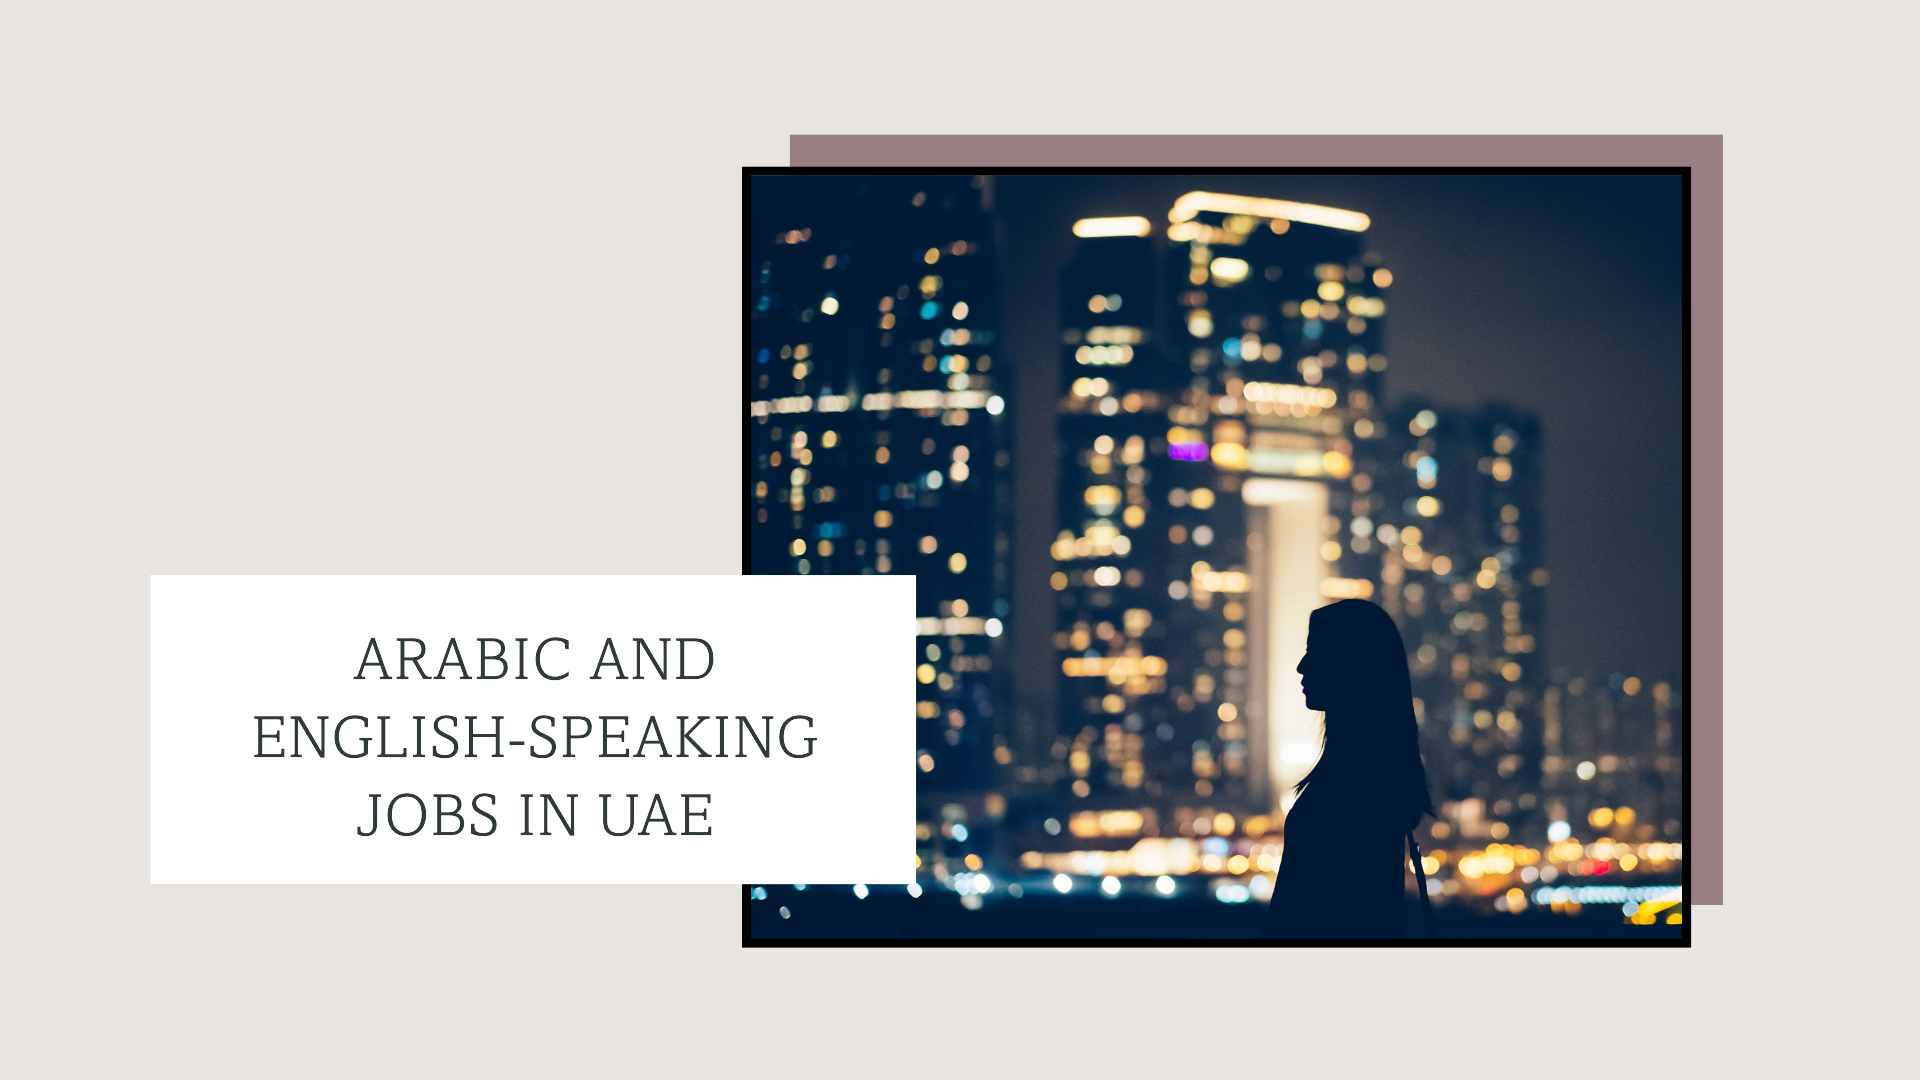 Arabic and English-speaking jobs in UAE